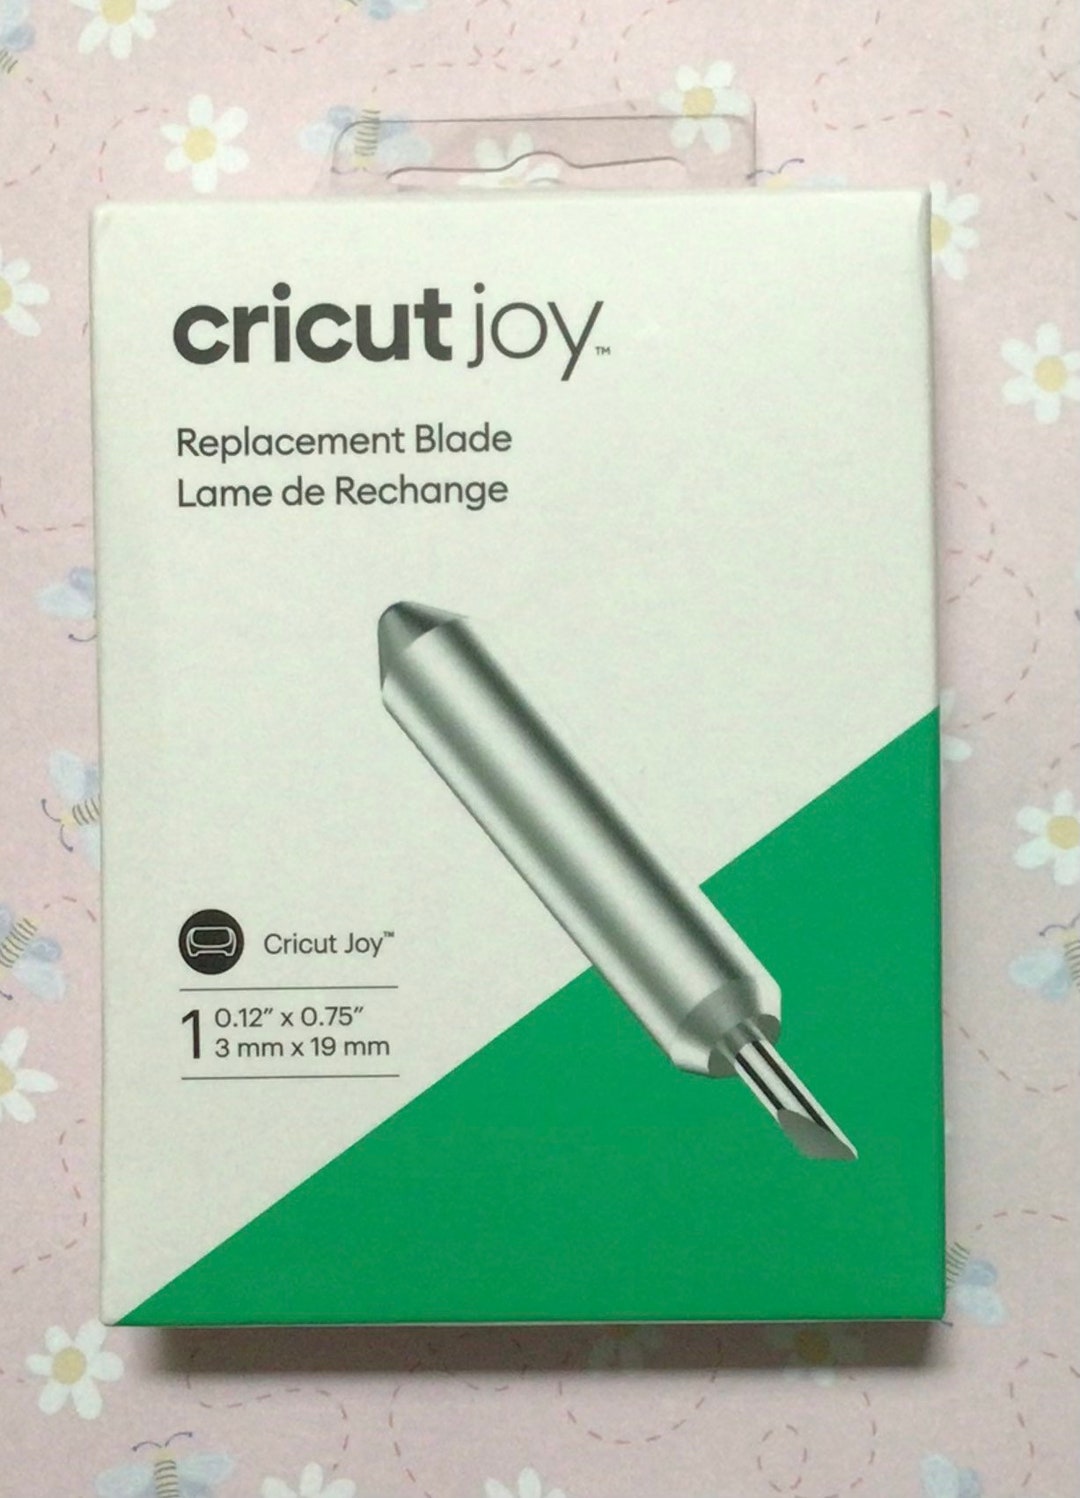 Cricut Joy Replacement Blade